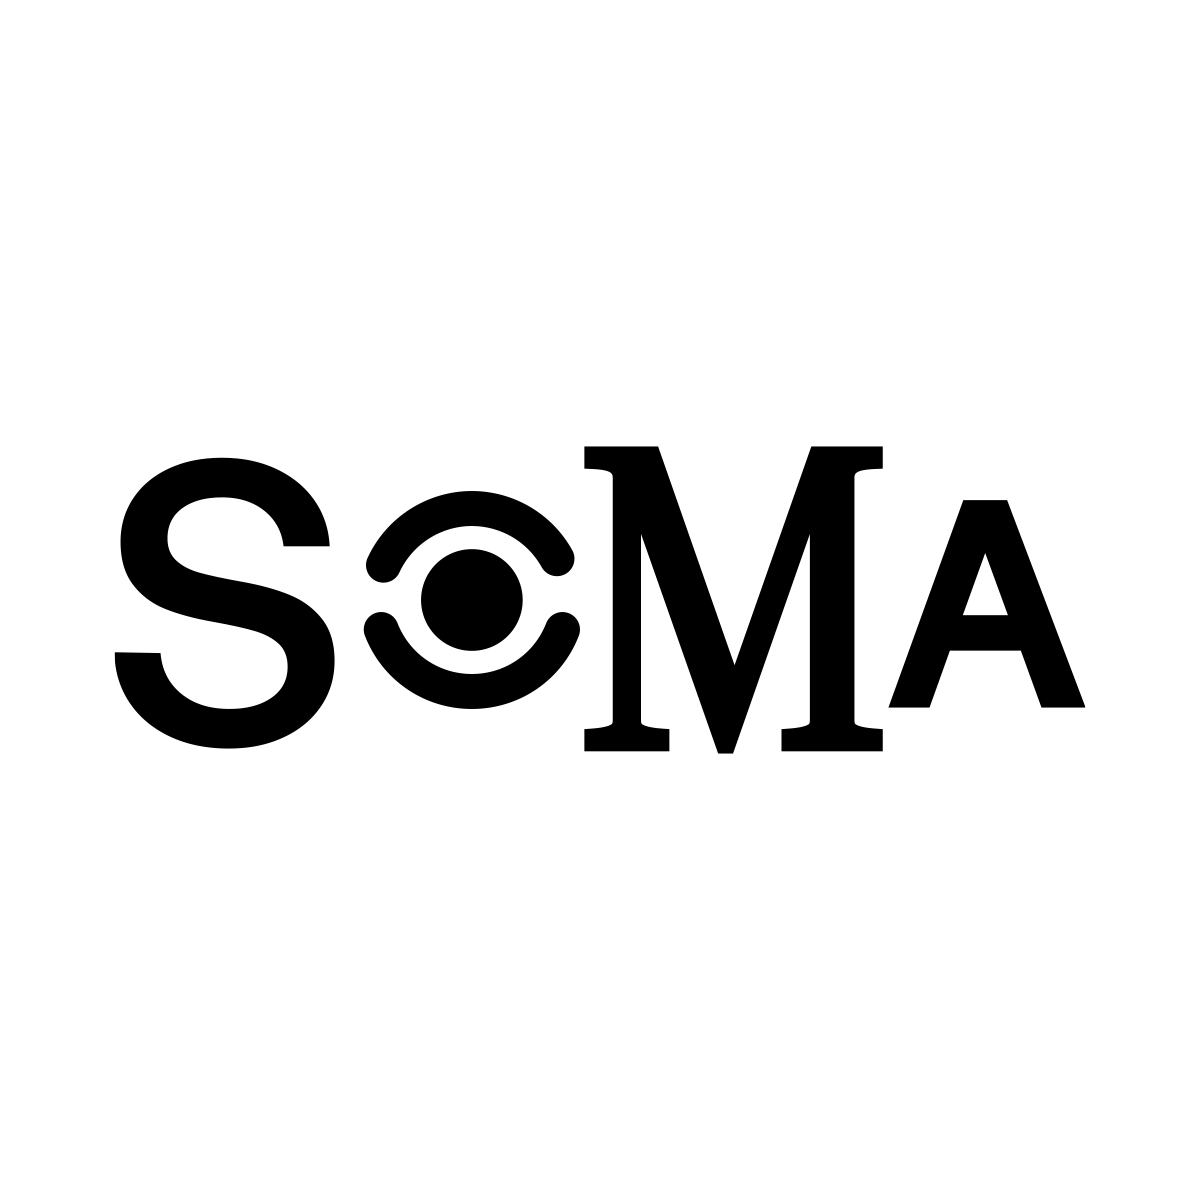 Soma by Andrés Higueros